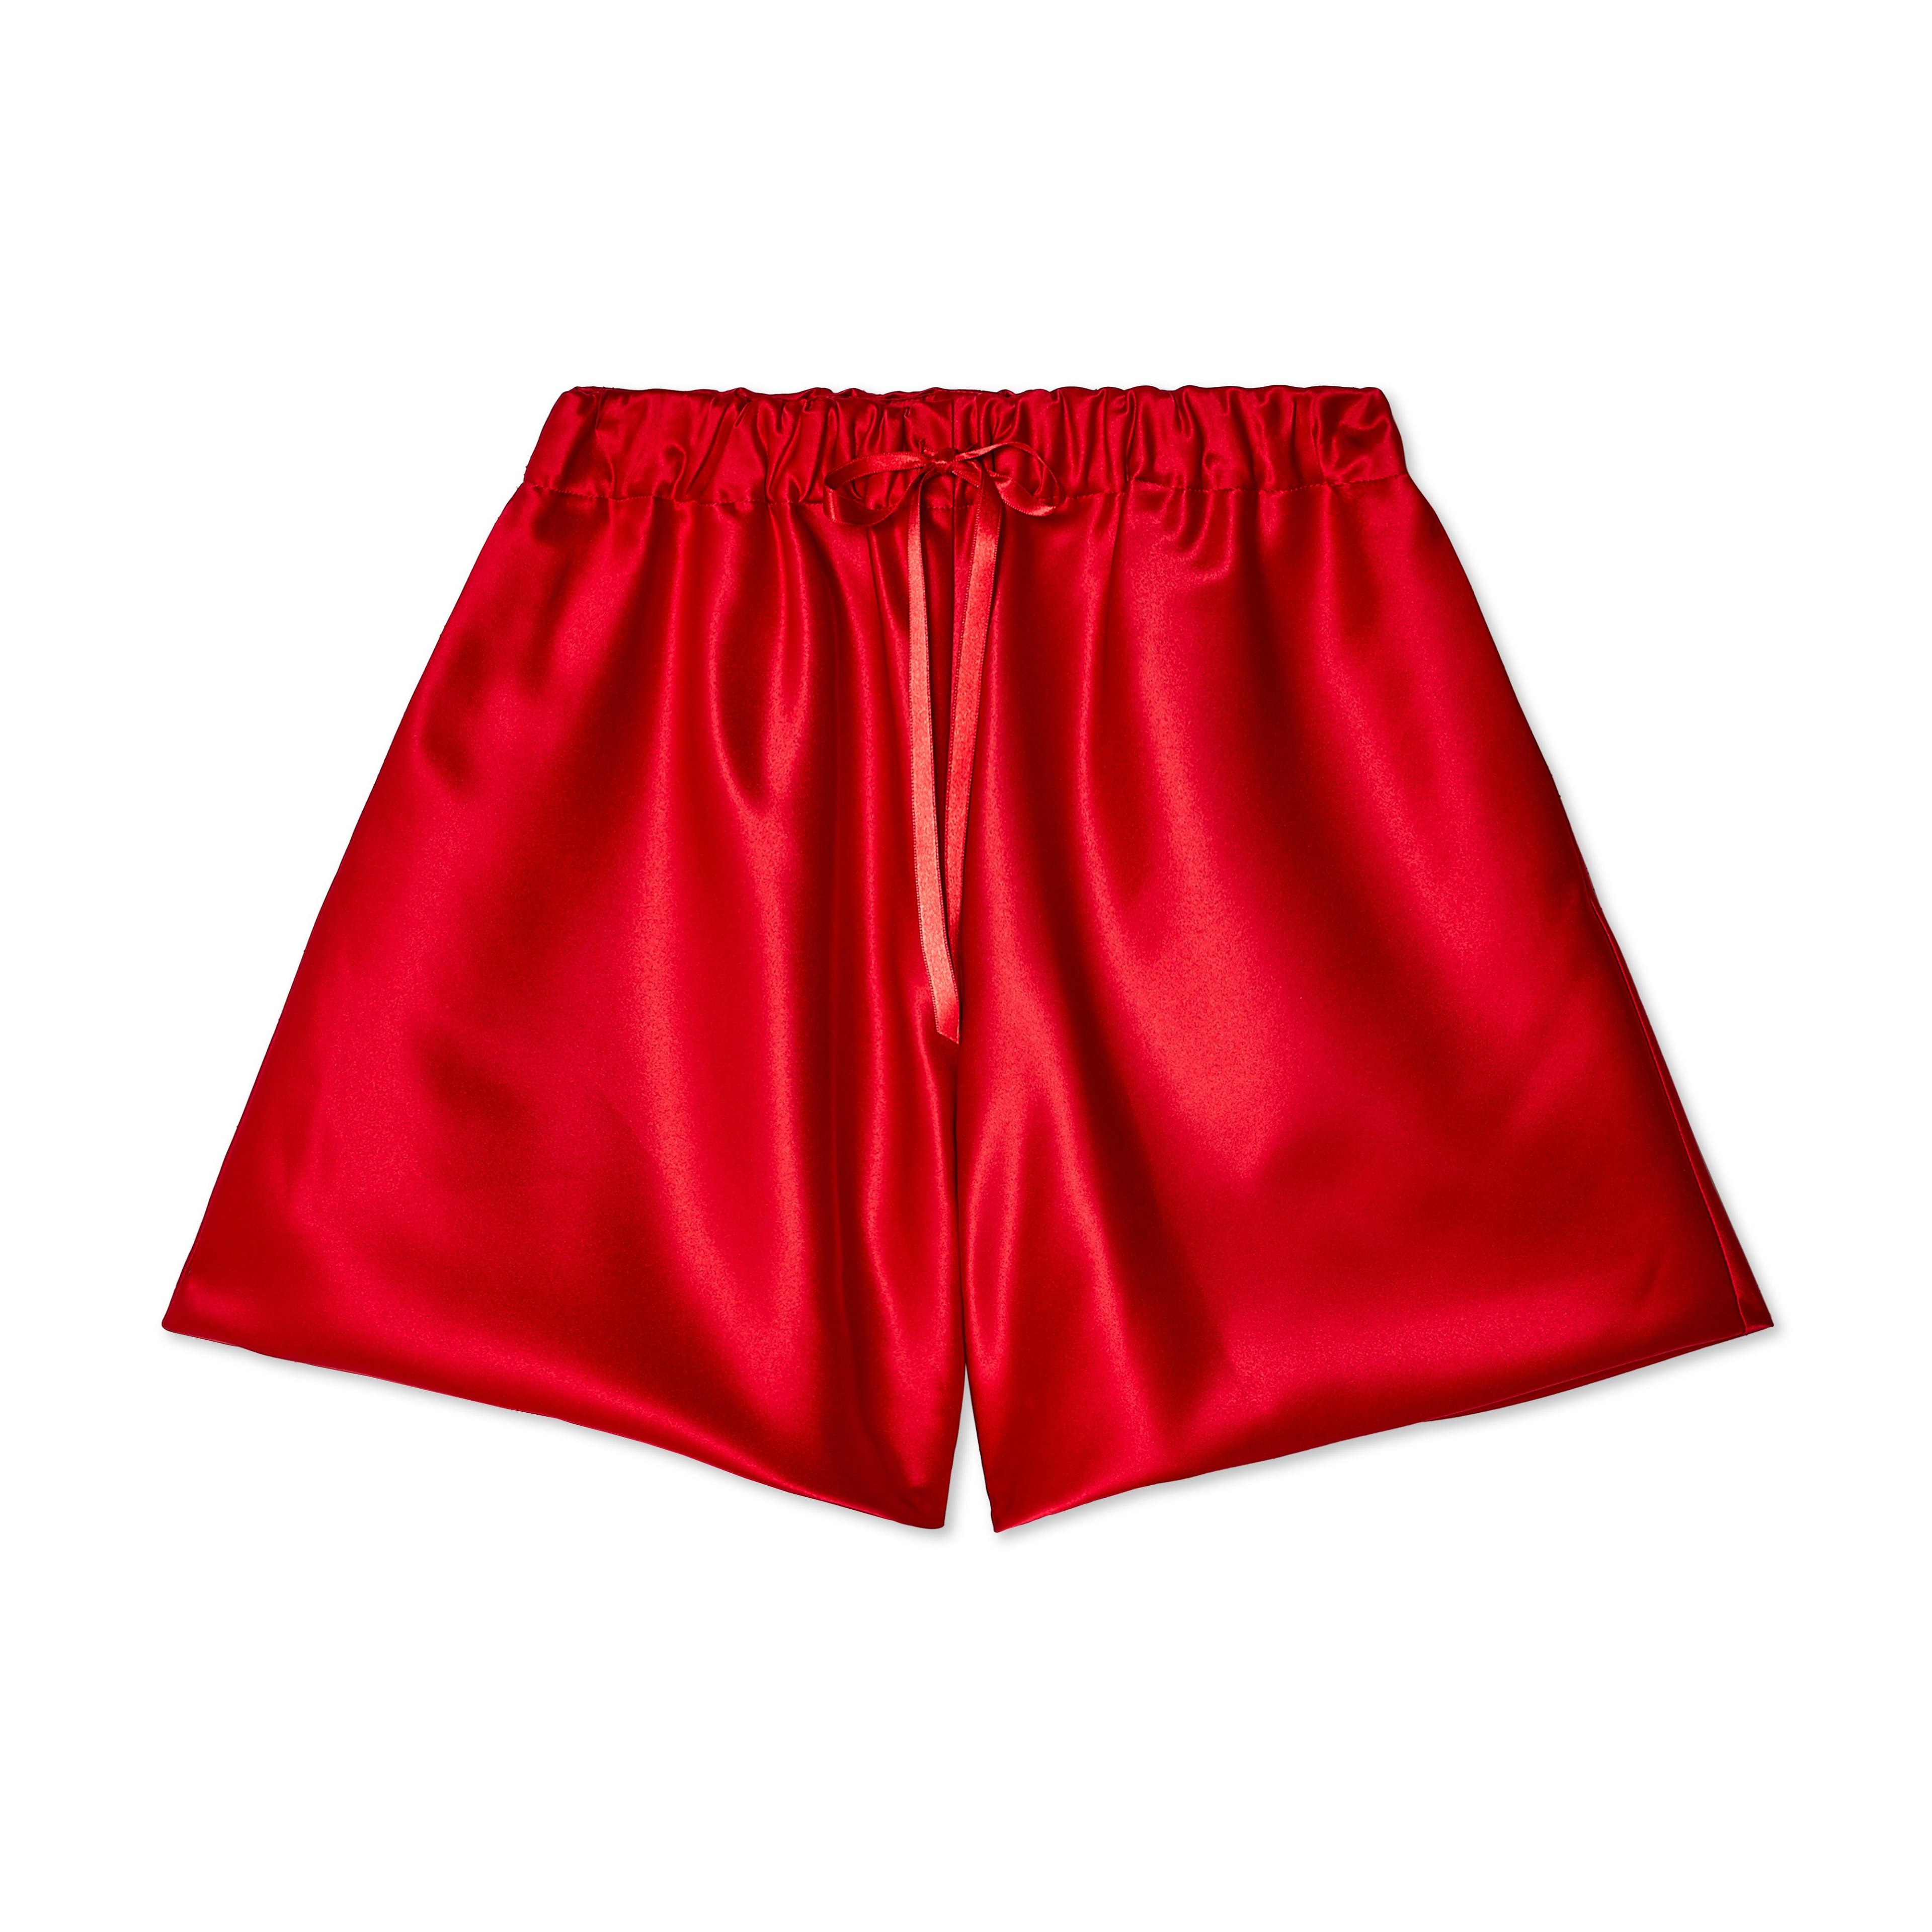 Simone Rocha - Women's Boxer Shorts - (Red) by SIMONE ROCHA